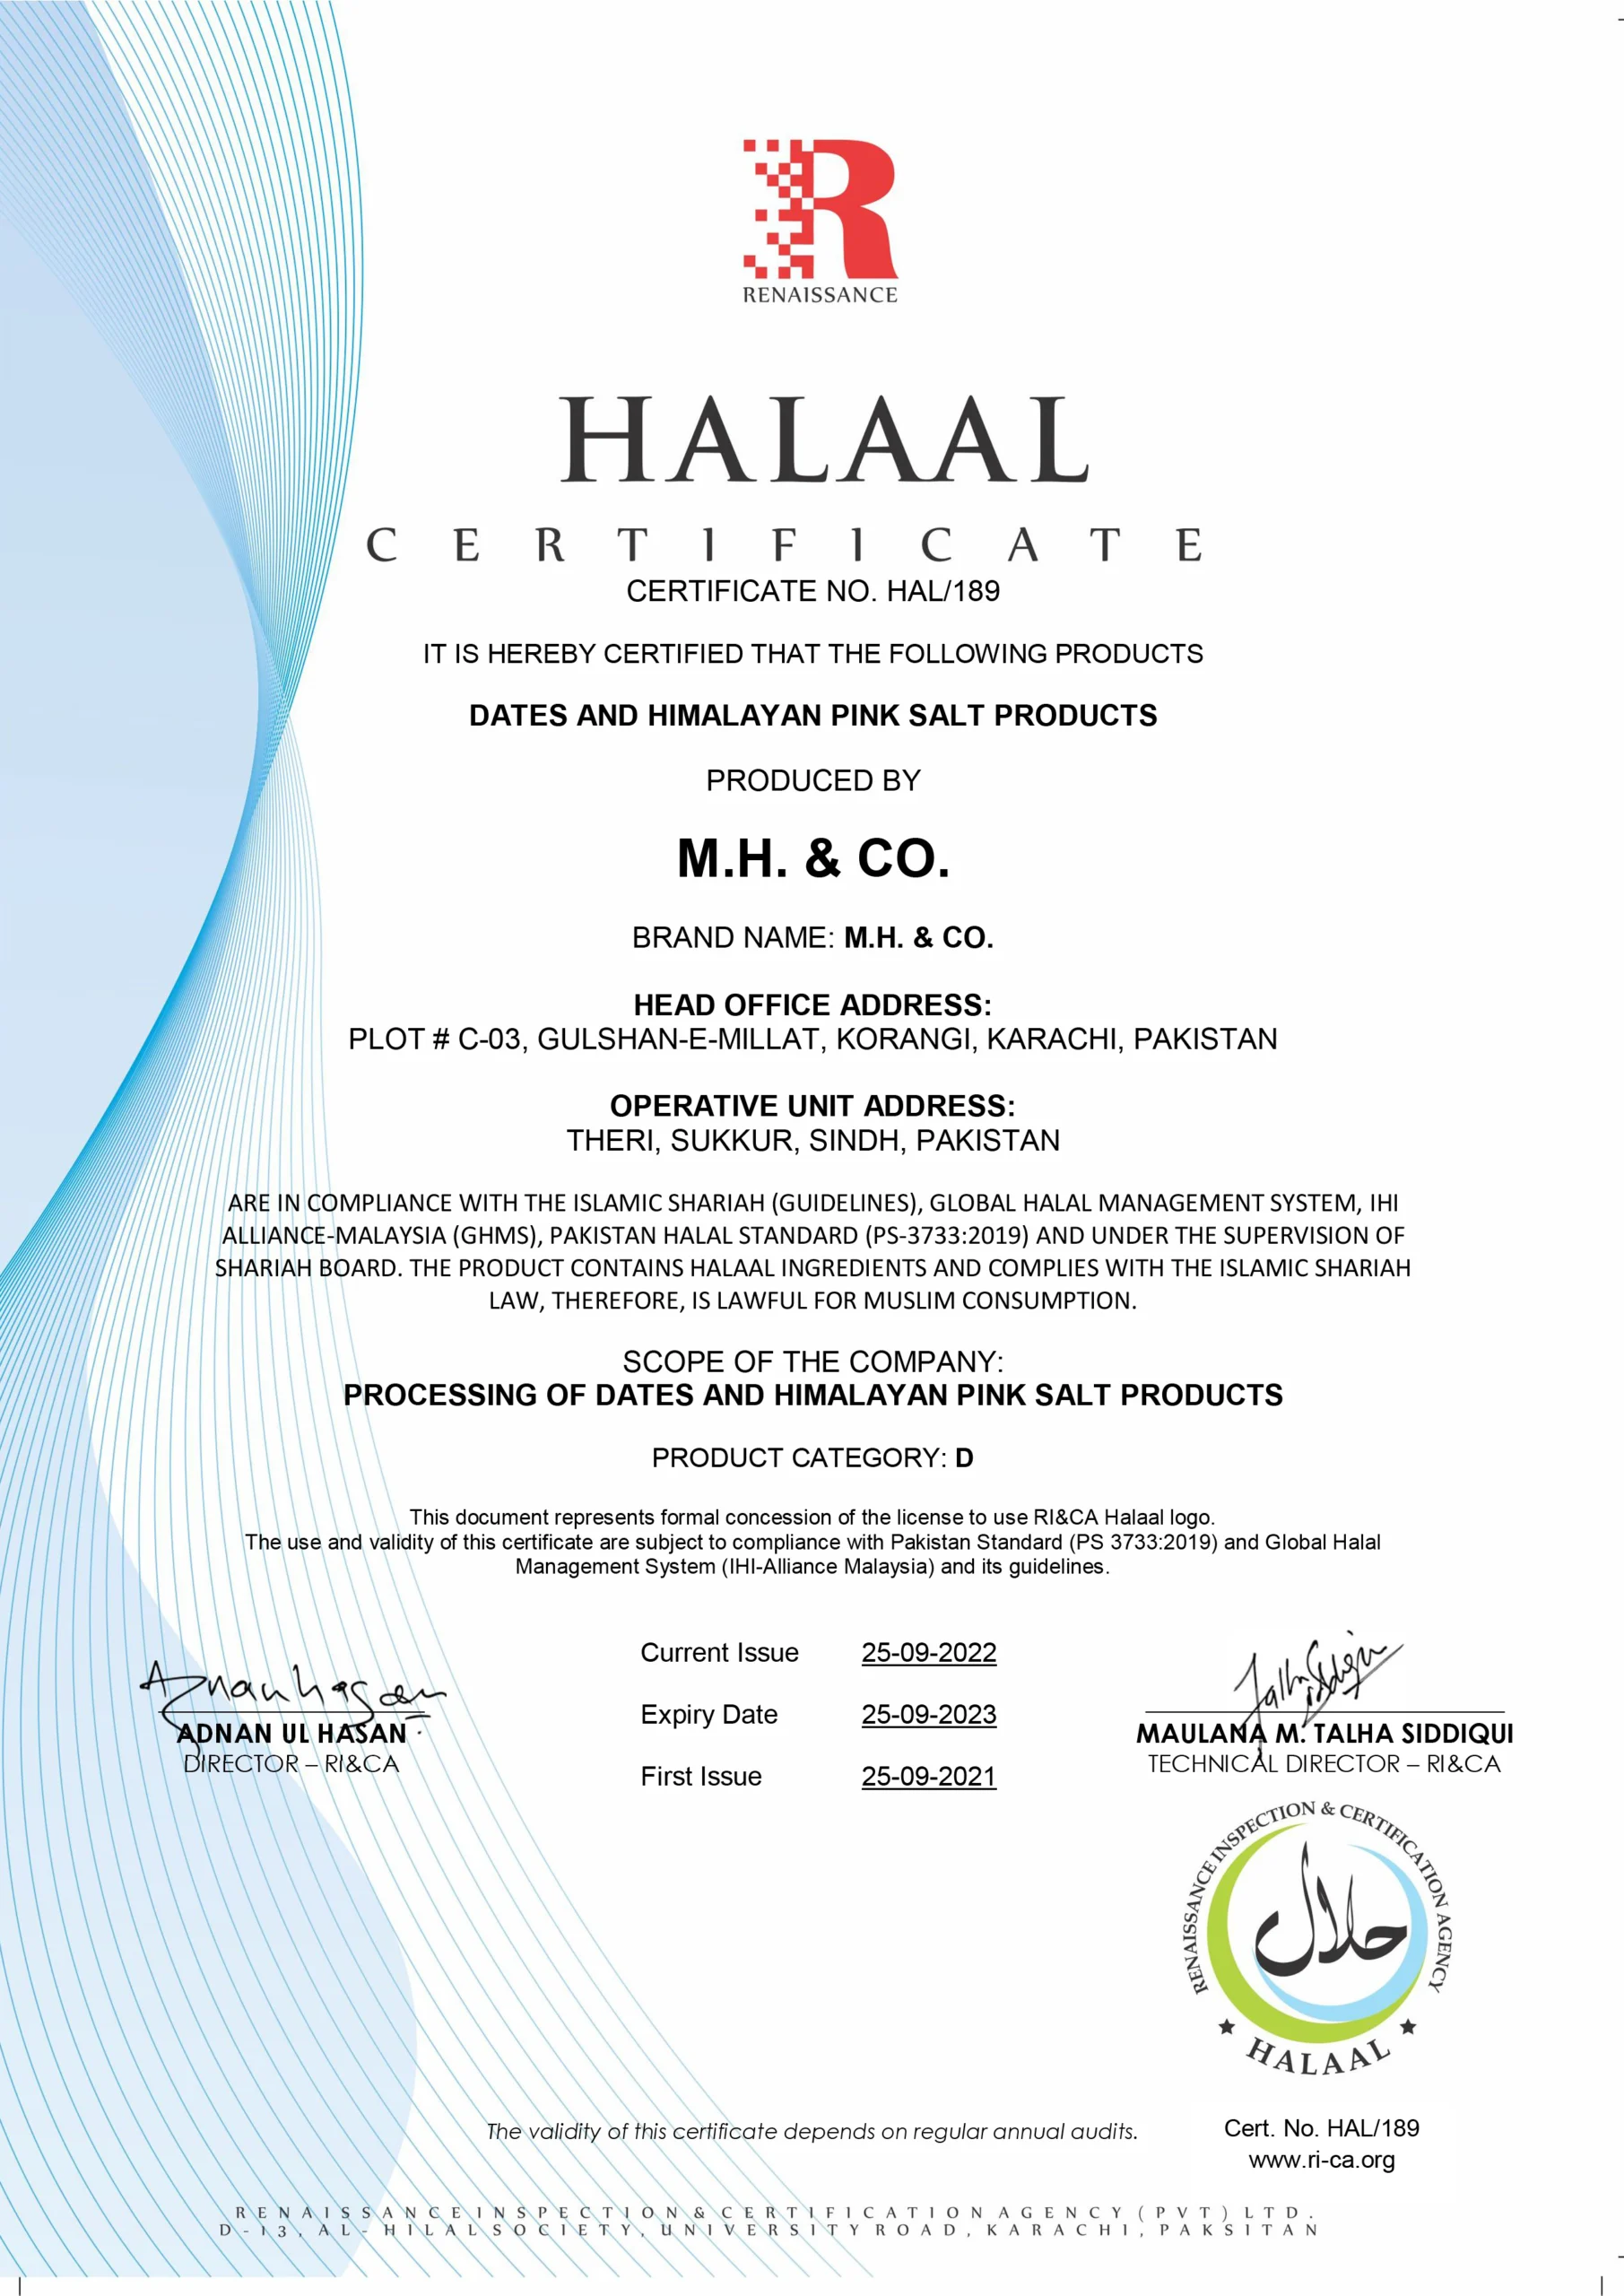 M.H. Halal Certificate